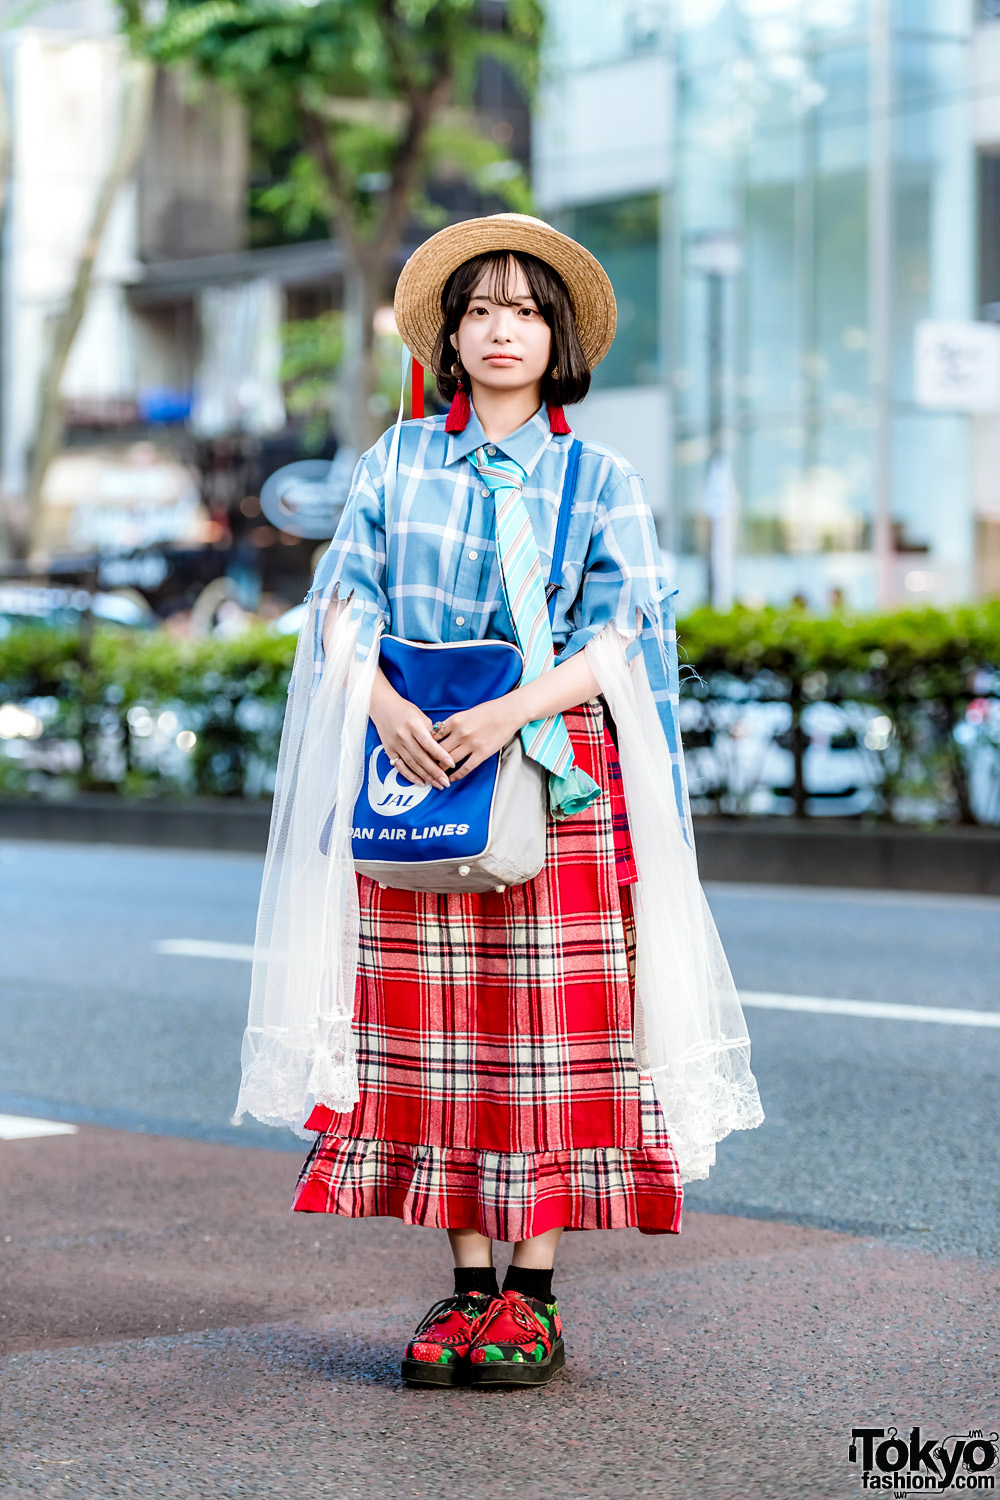 Remake Street Style in Harajuku w/ Plaid Ruffle Skirt, Checkered Shirt & Yosuke Strawberry Creepers